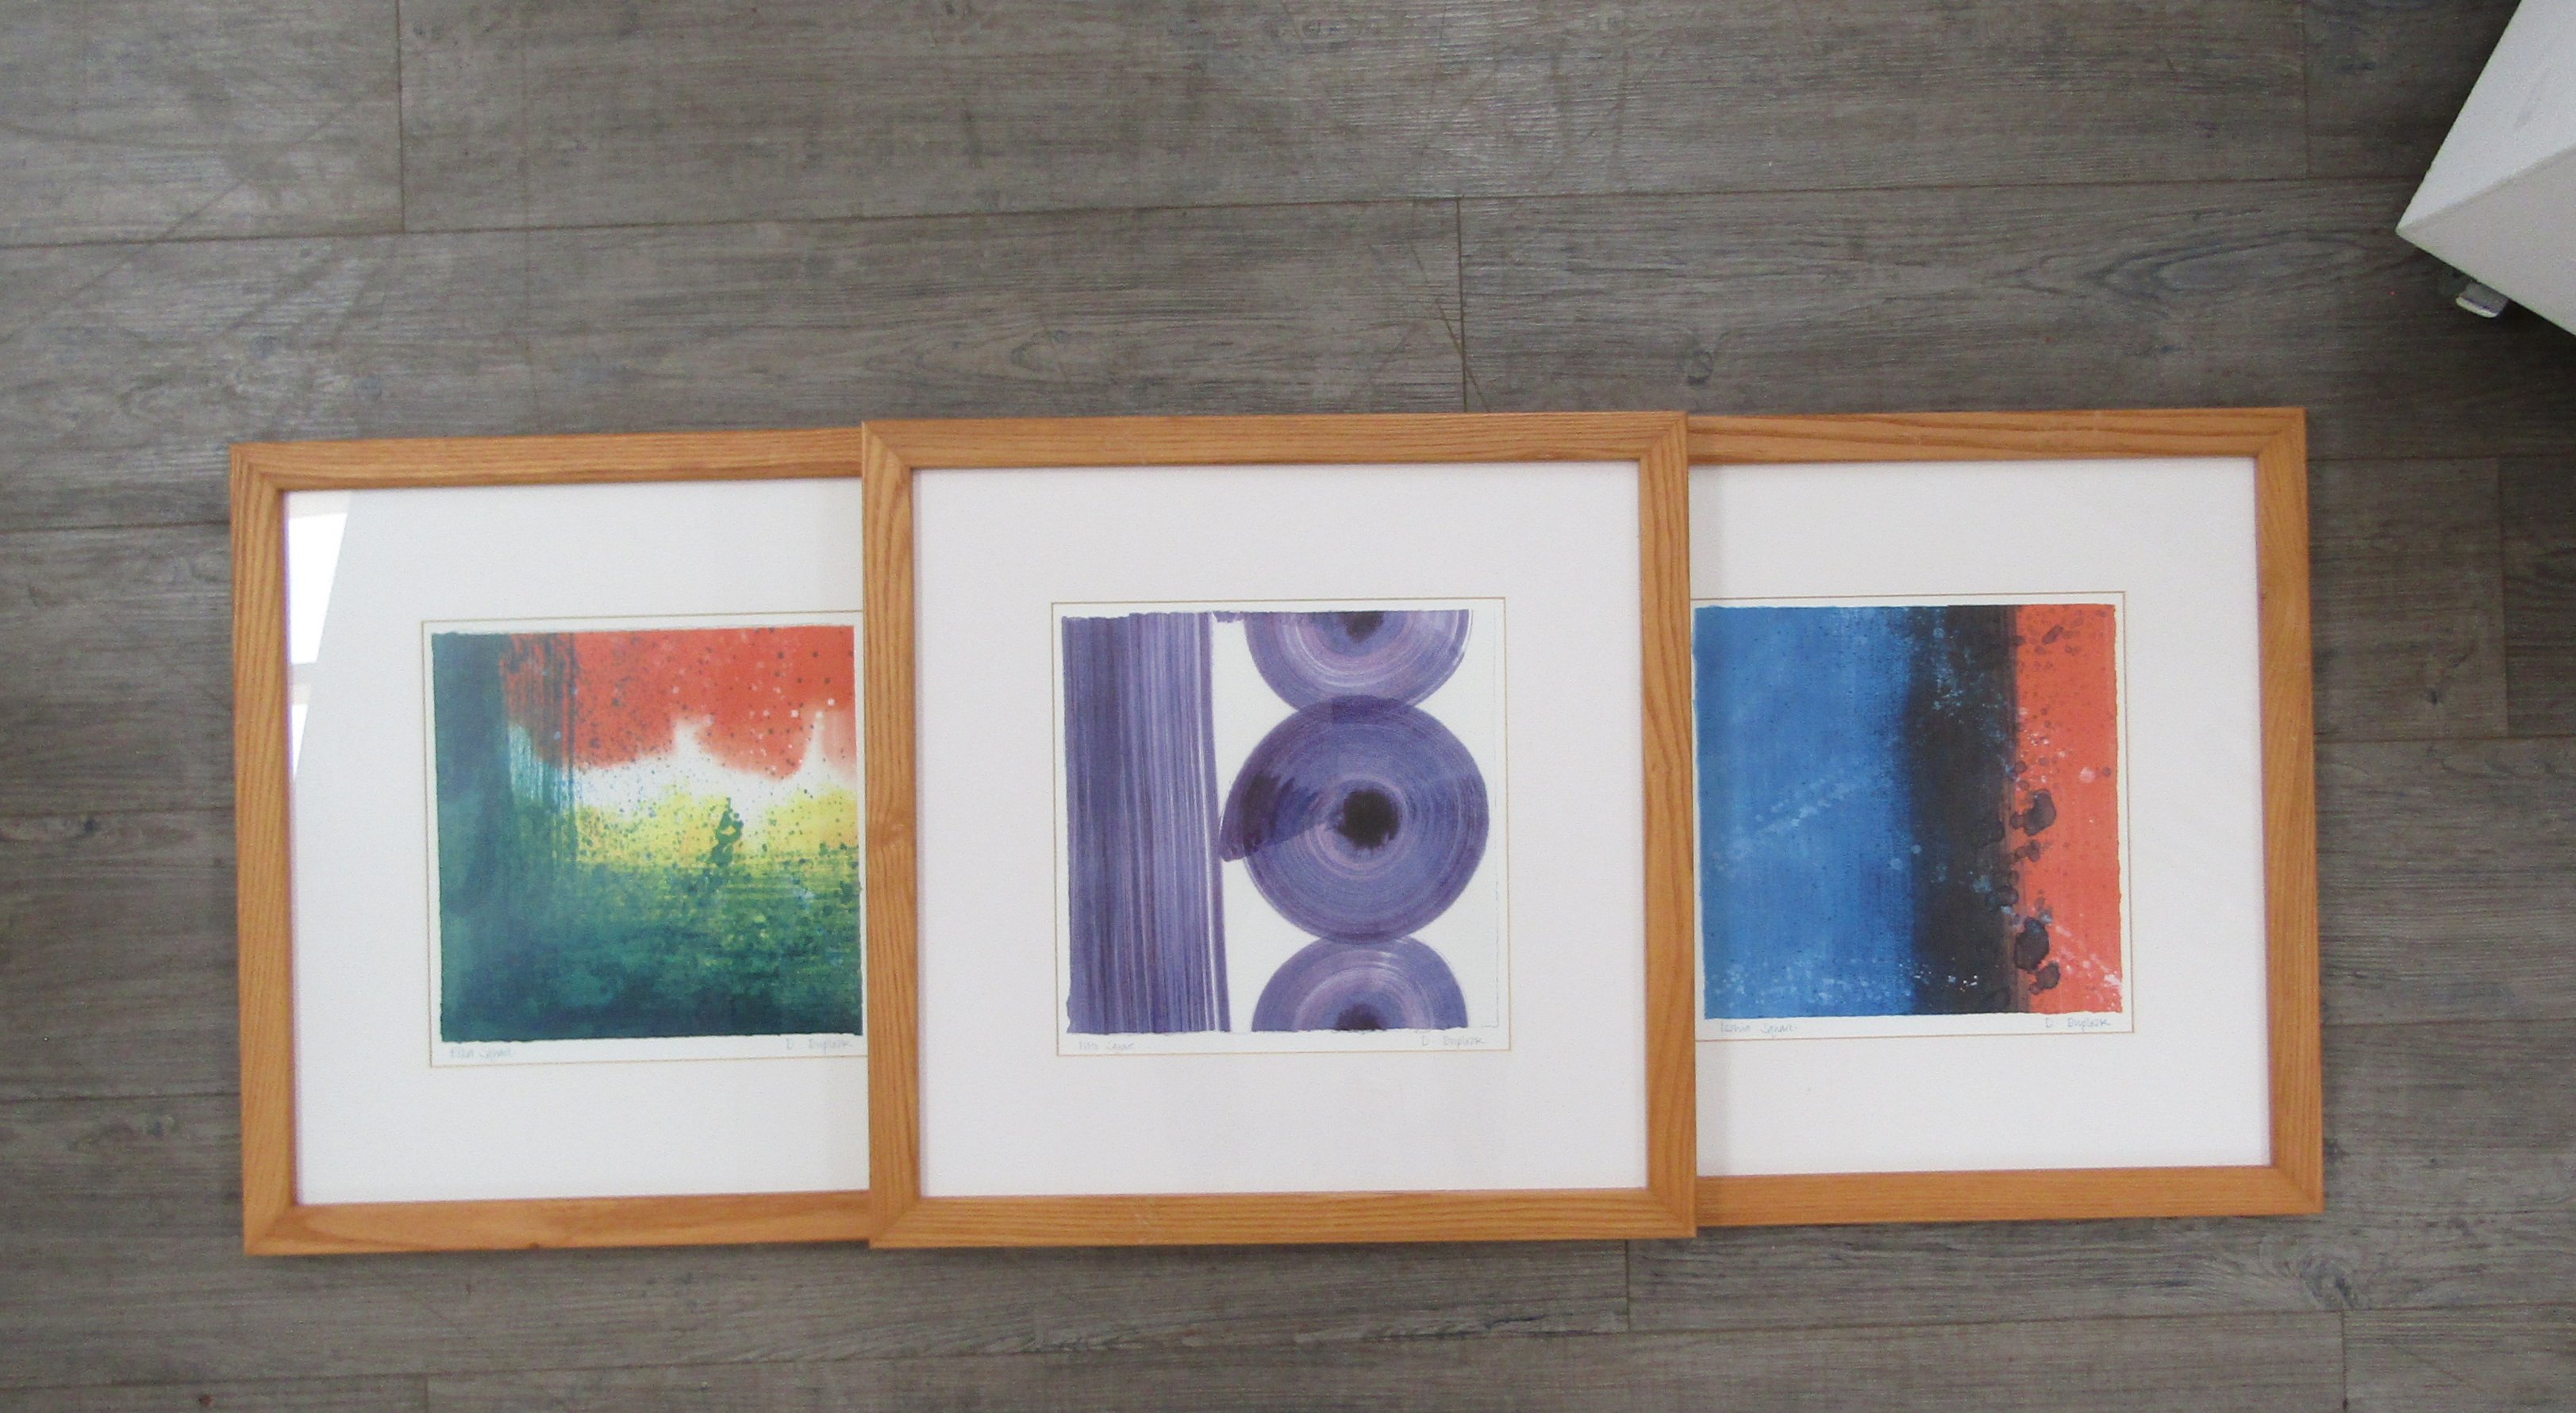 Three Denise Duplock framed original abstract art prints, signed. Image sizes 29.5cm x 20.5cm